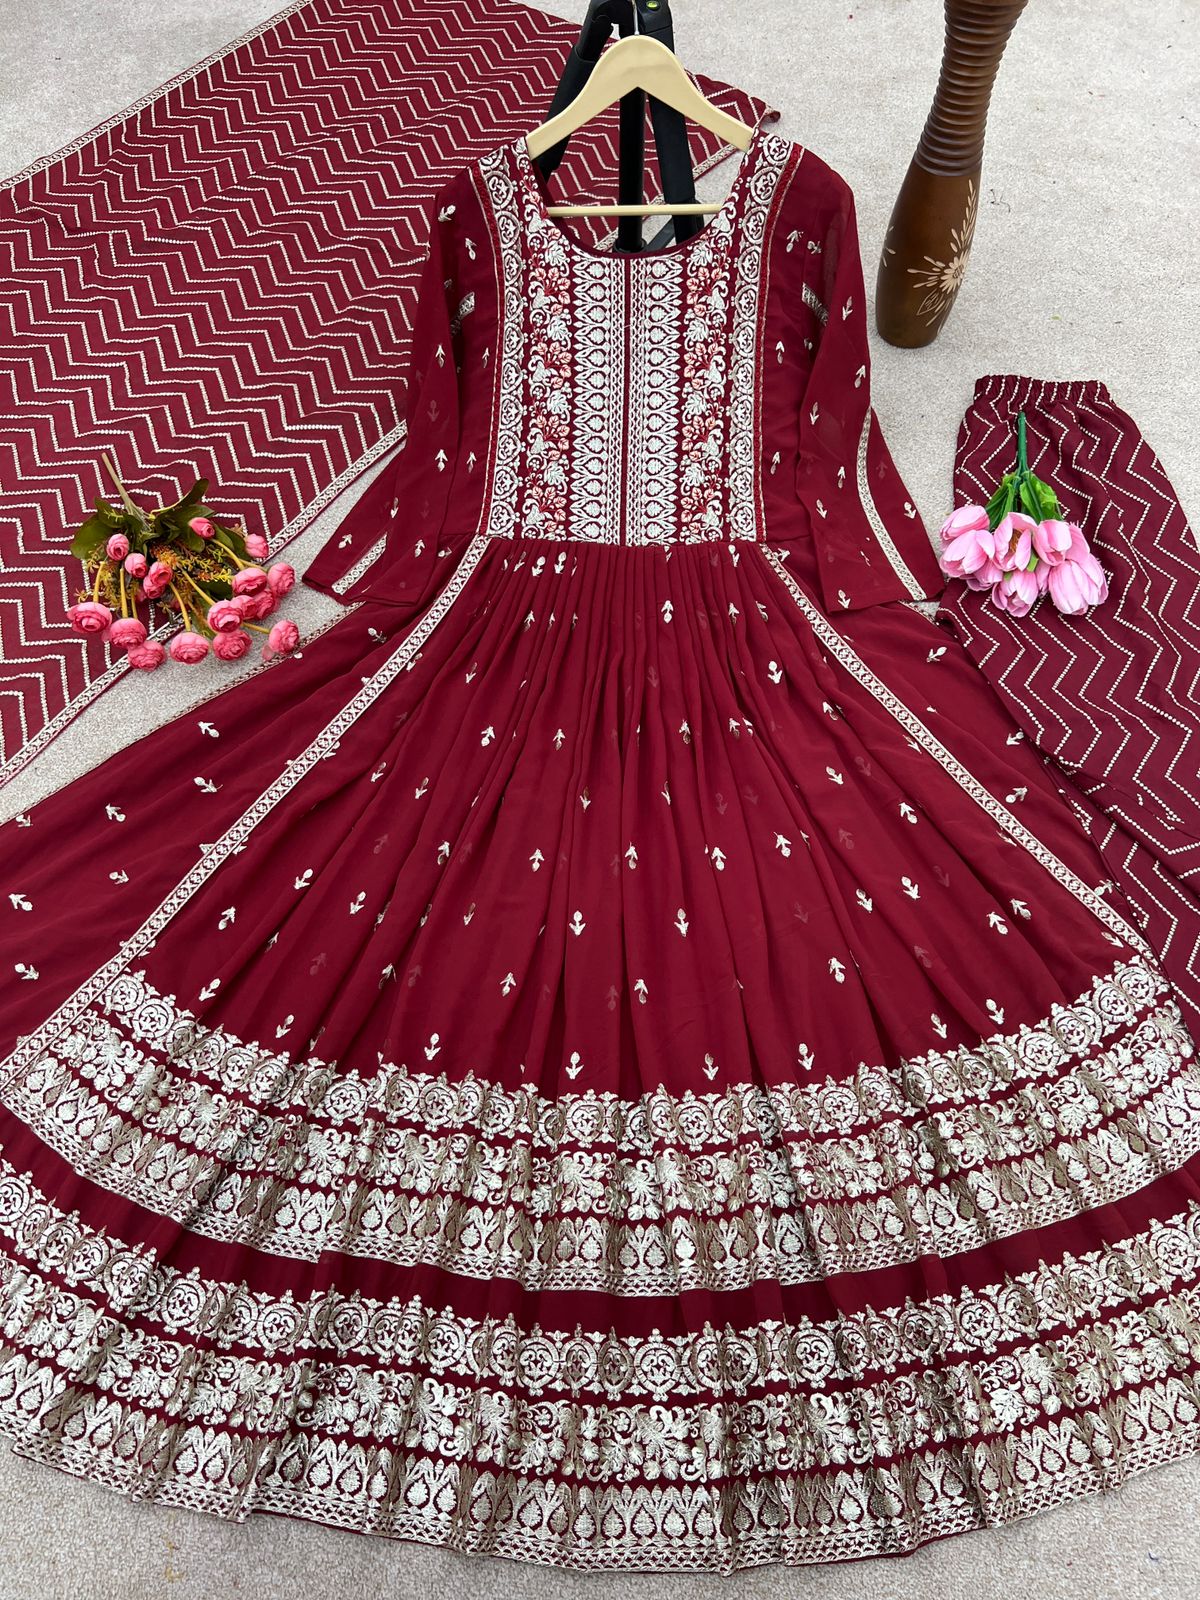 Marvelous Maroon Color Embroidery Work Salwar Suit